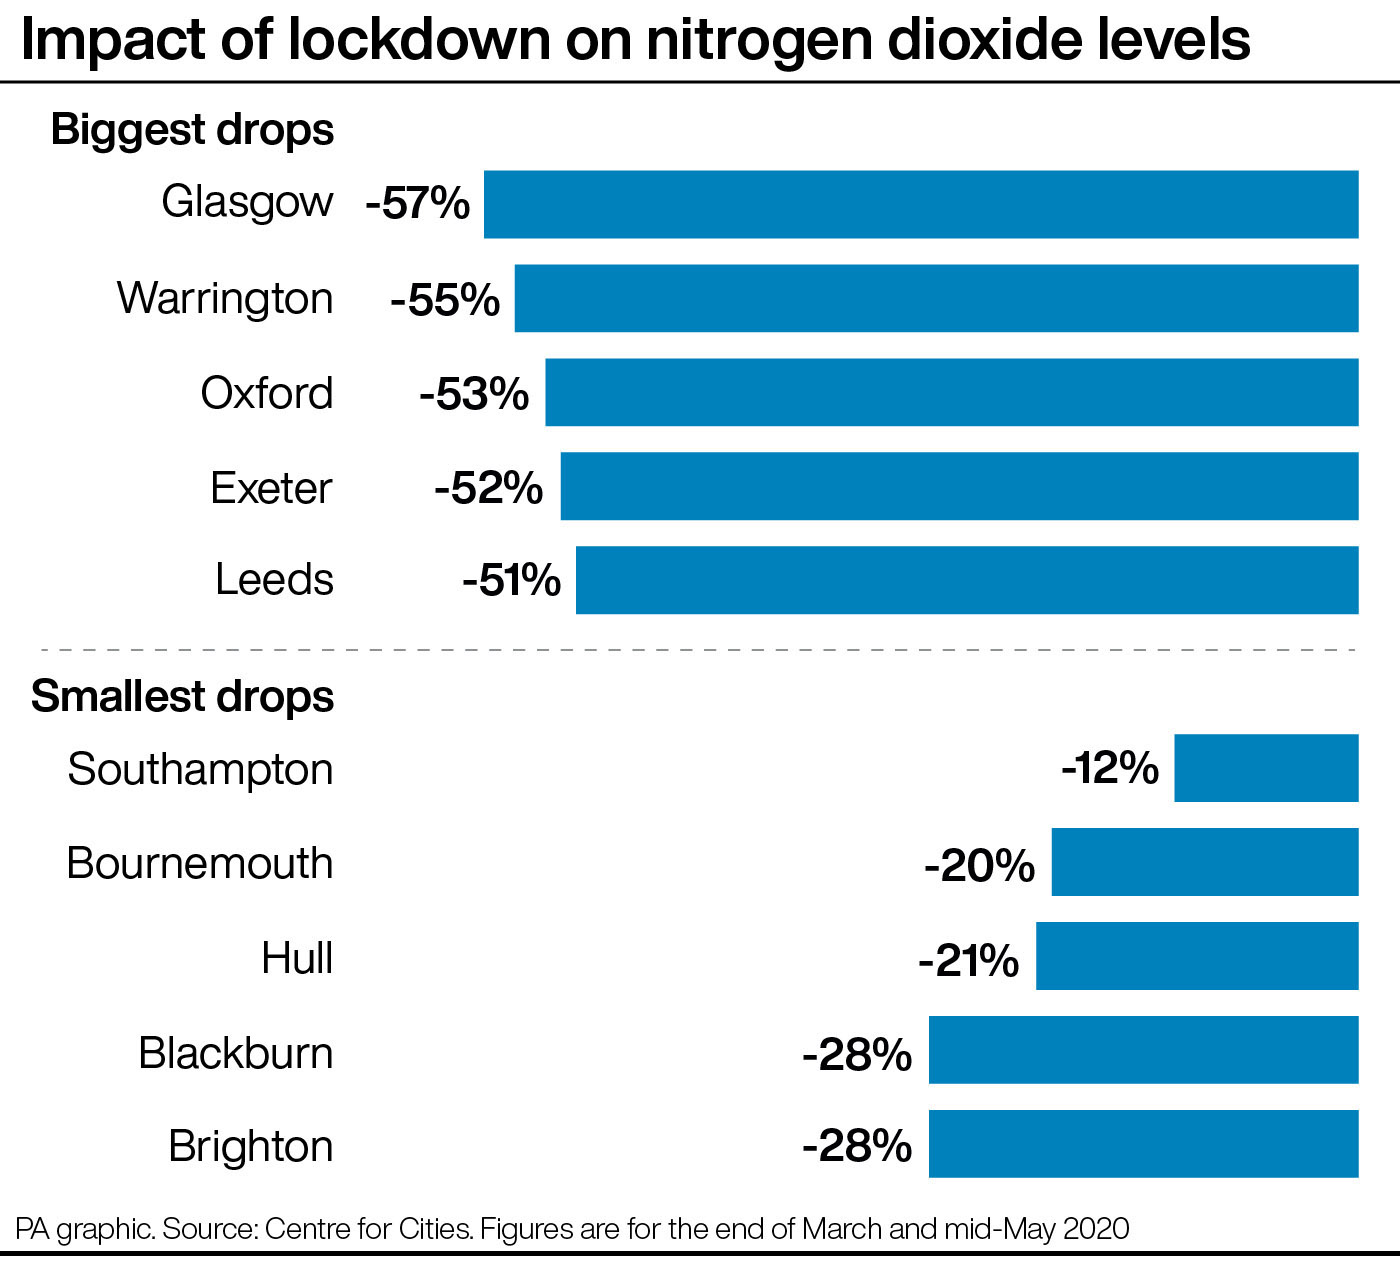 Impact of lockdown on nitrogen dioxide levels